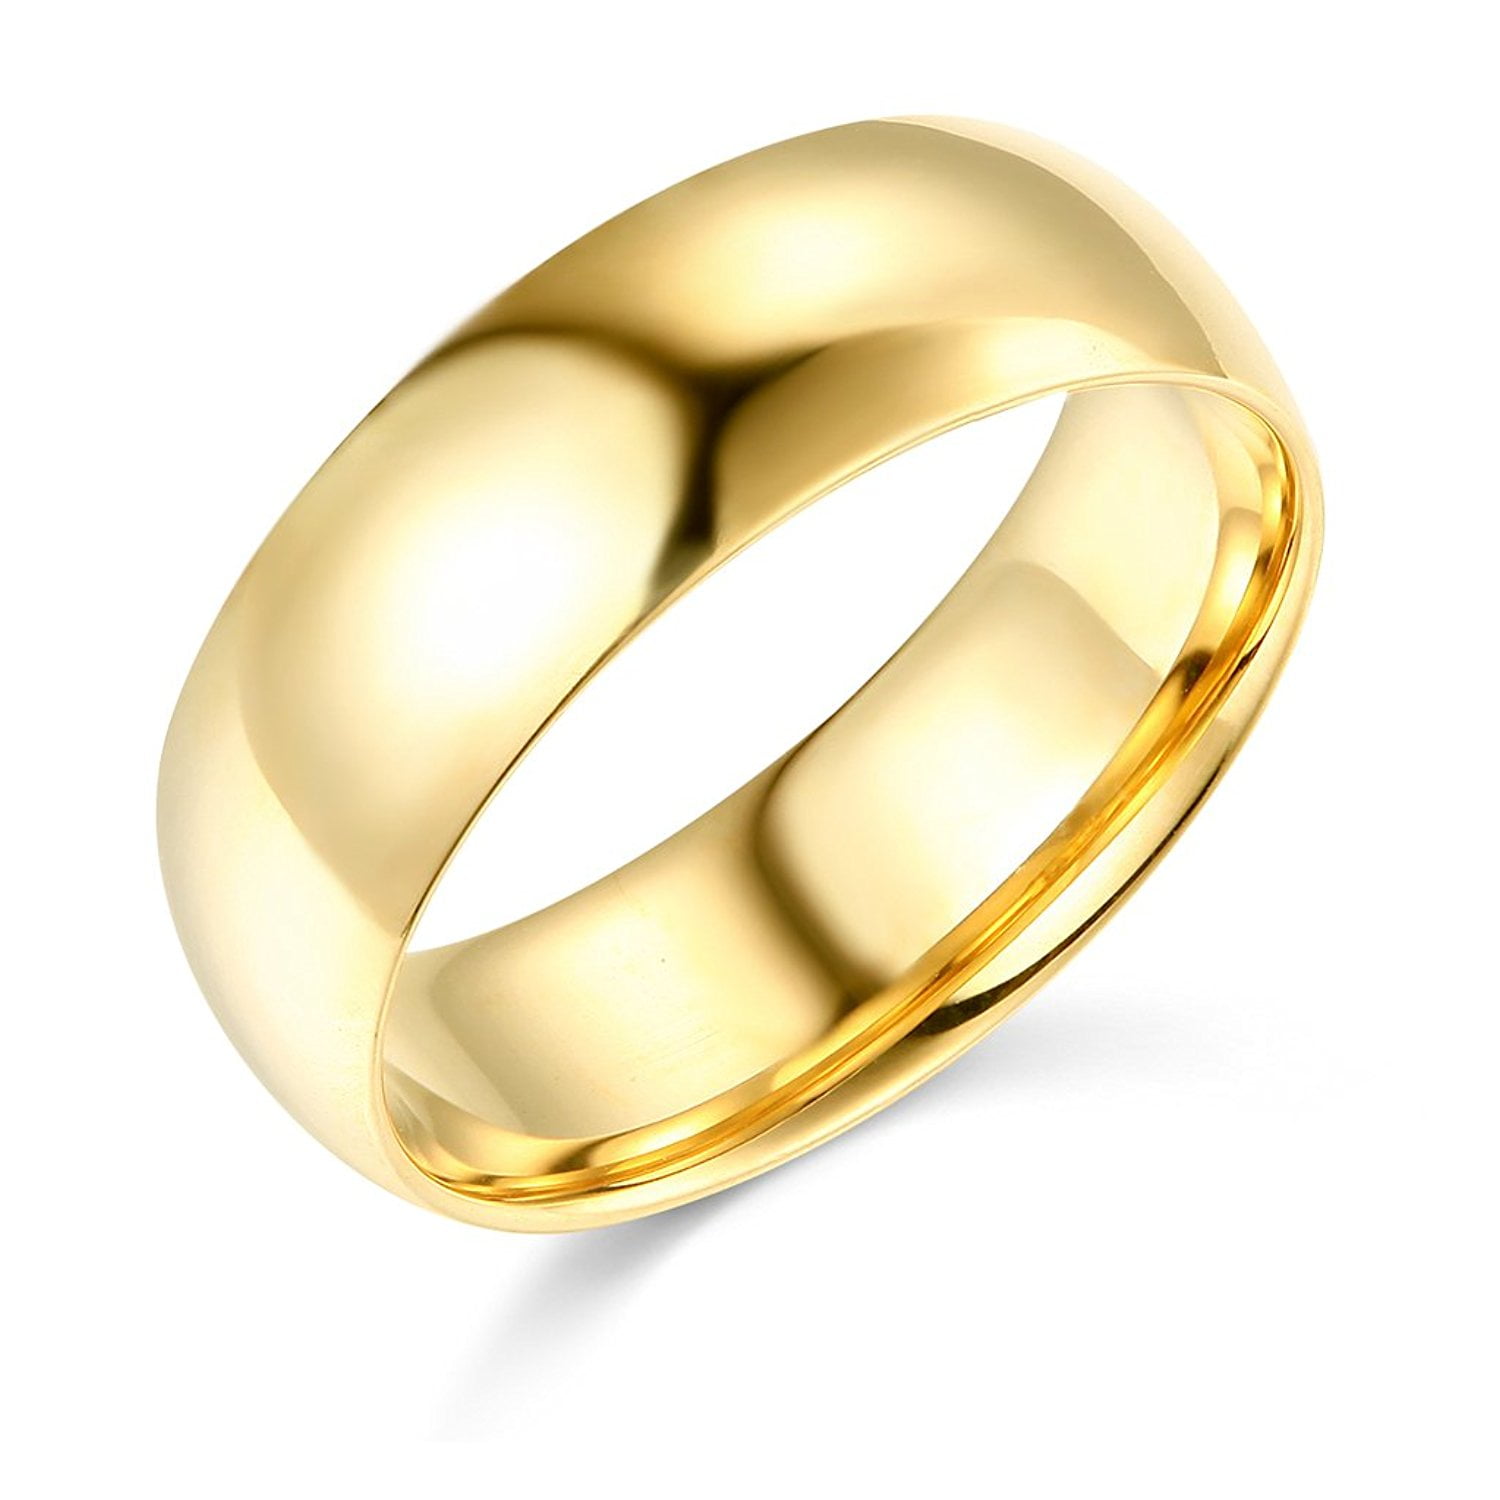 Heavy Weight Gold Ring | Trendy 22ct Hallmark